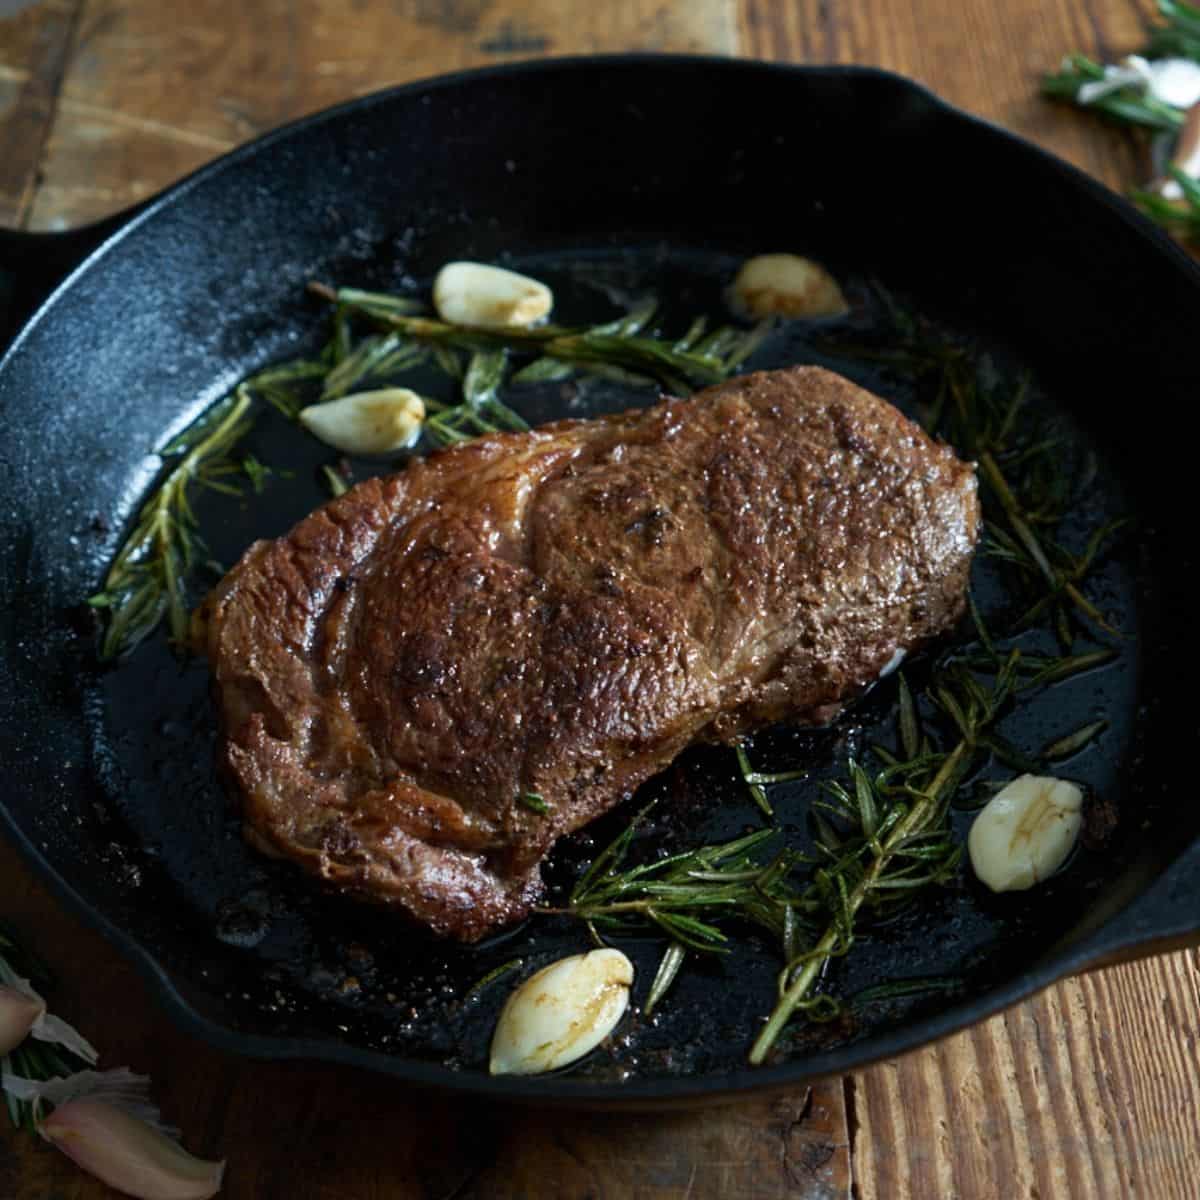 https://finefoodsblog.com/wp-content/uploads/2019/12/cast-iron-skillet-steak-1200.jpg